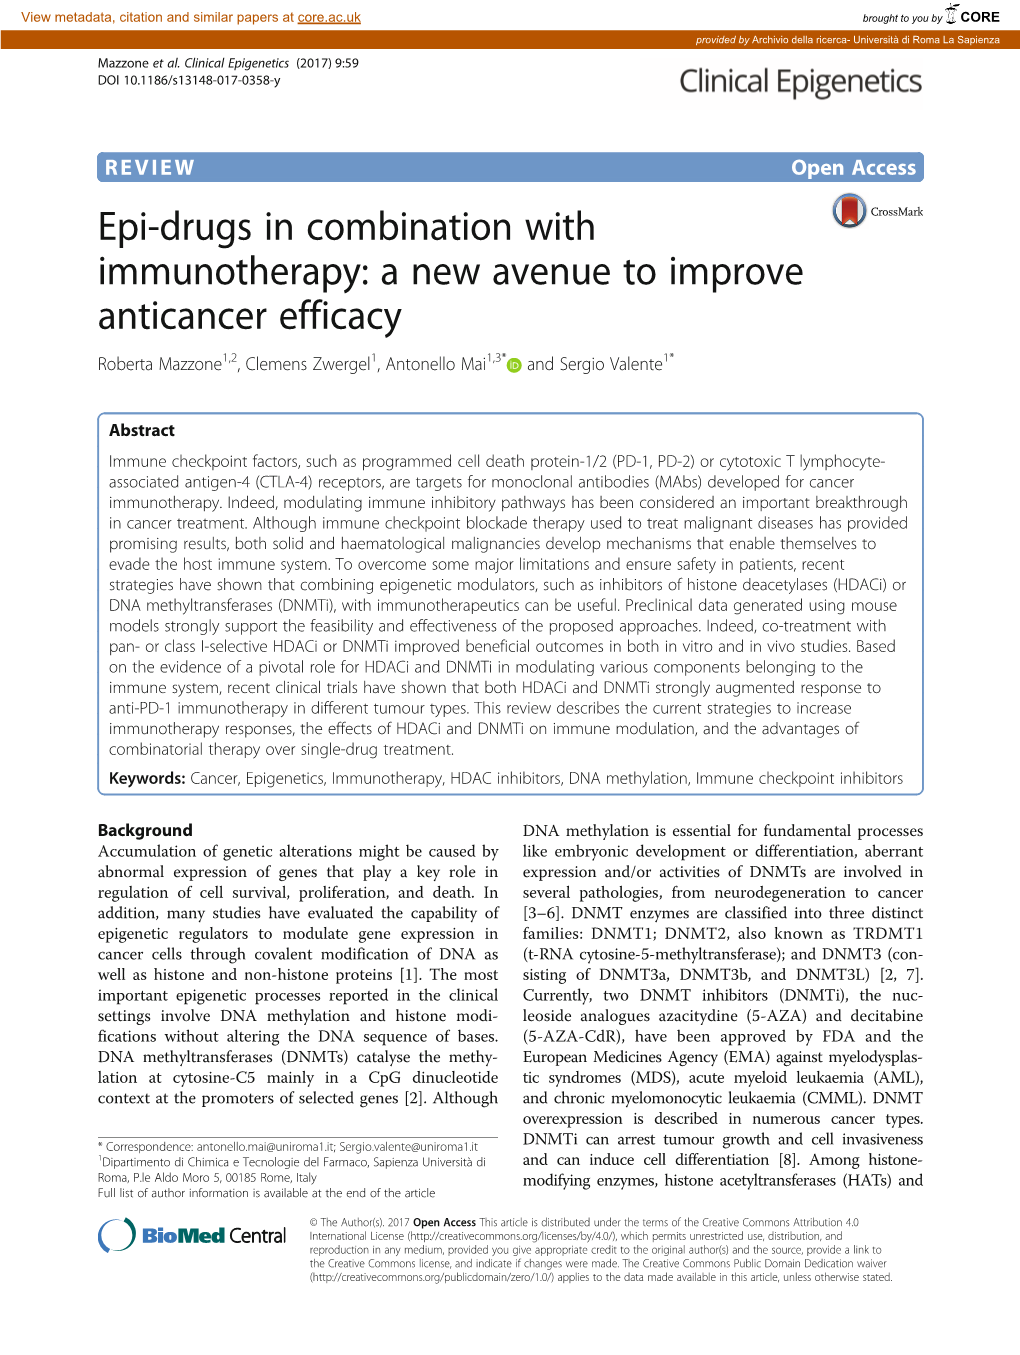 Epi-Drugs in Combination with Immunotherapy: a New Avenue to Improve Anticancer Efficacy Roberta Mazzone1,2, Clemens Zwergel1, Antonello Mai1,3* and Sergio Valente1*